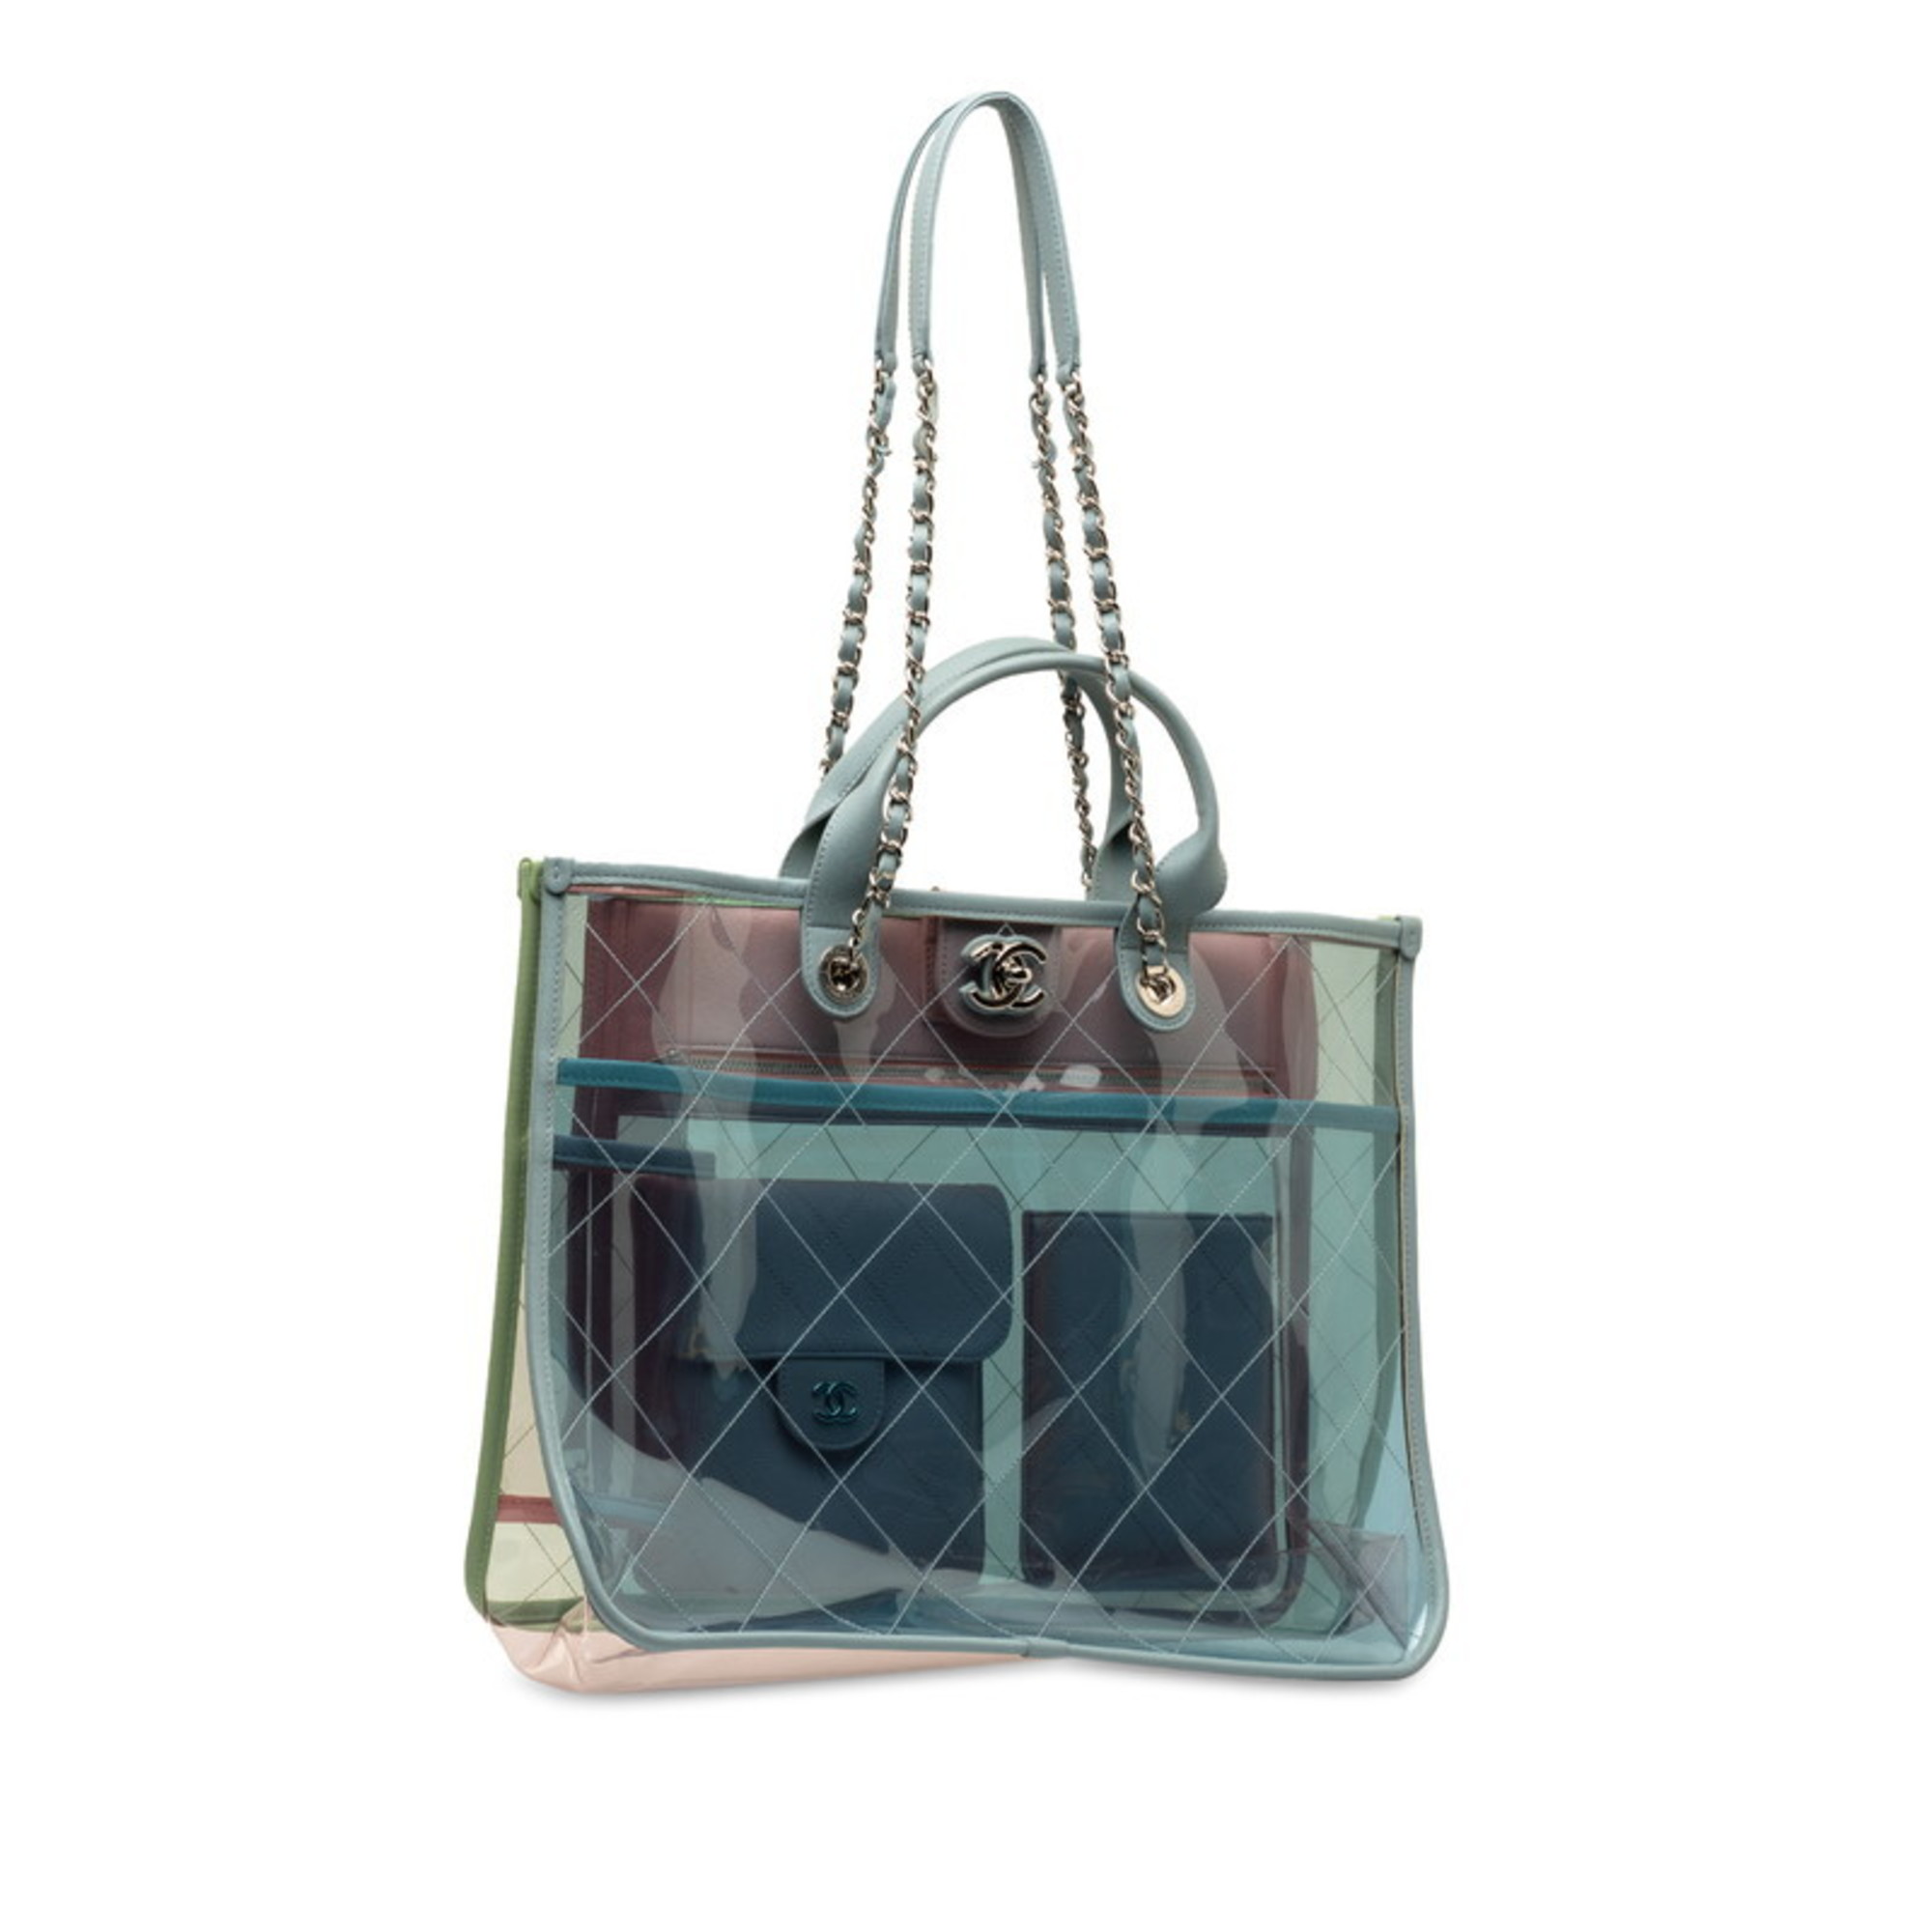 Chanel Matelasse Bag Pastel Tote Shoulder A57411 Blue Green Multicolor Vinyl Leather Women's CHANEL